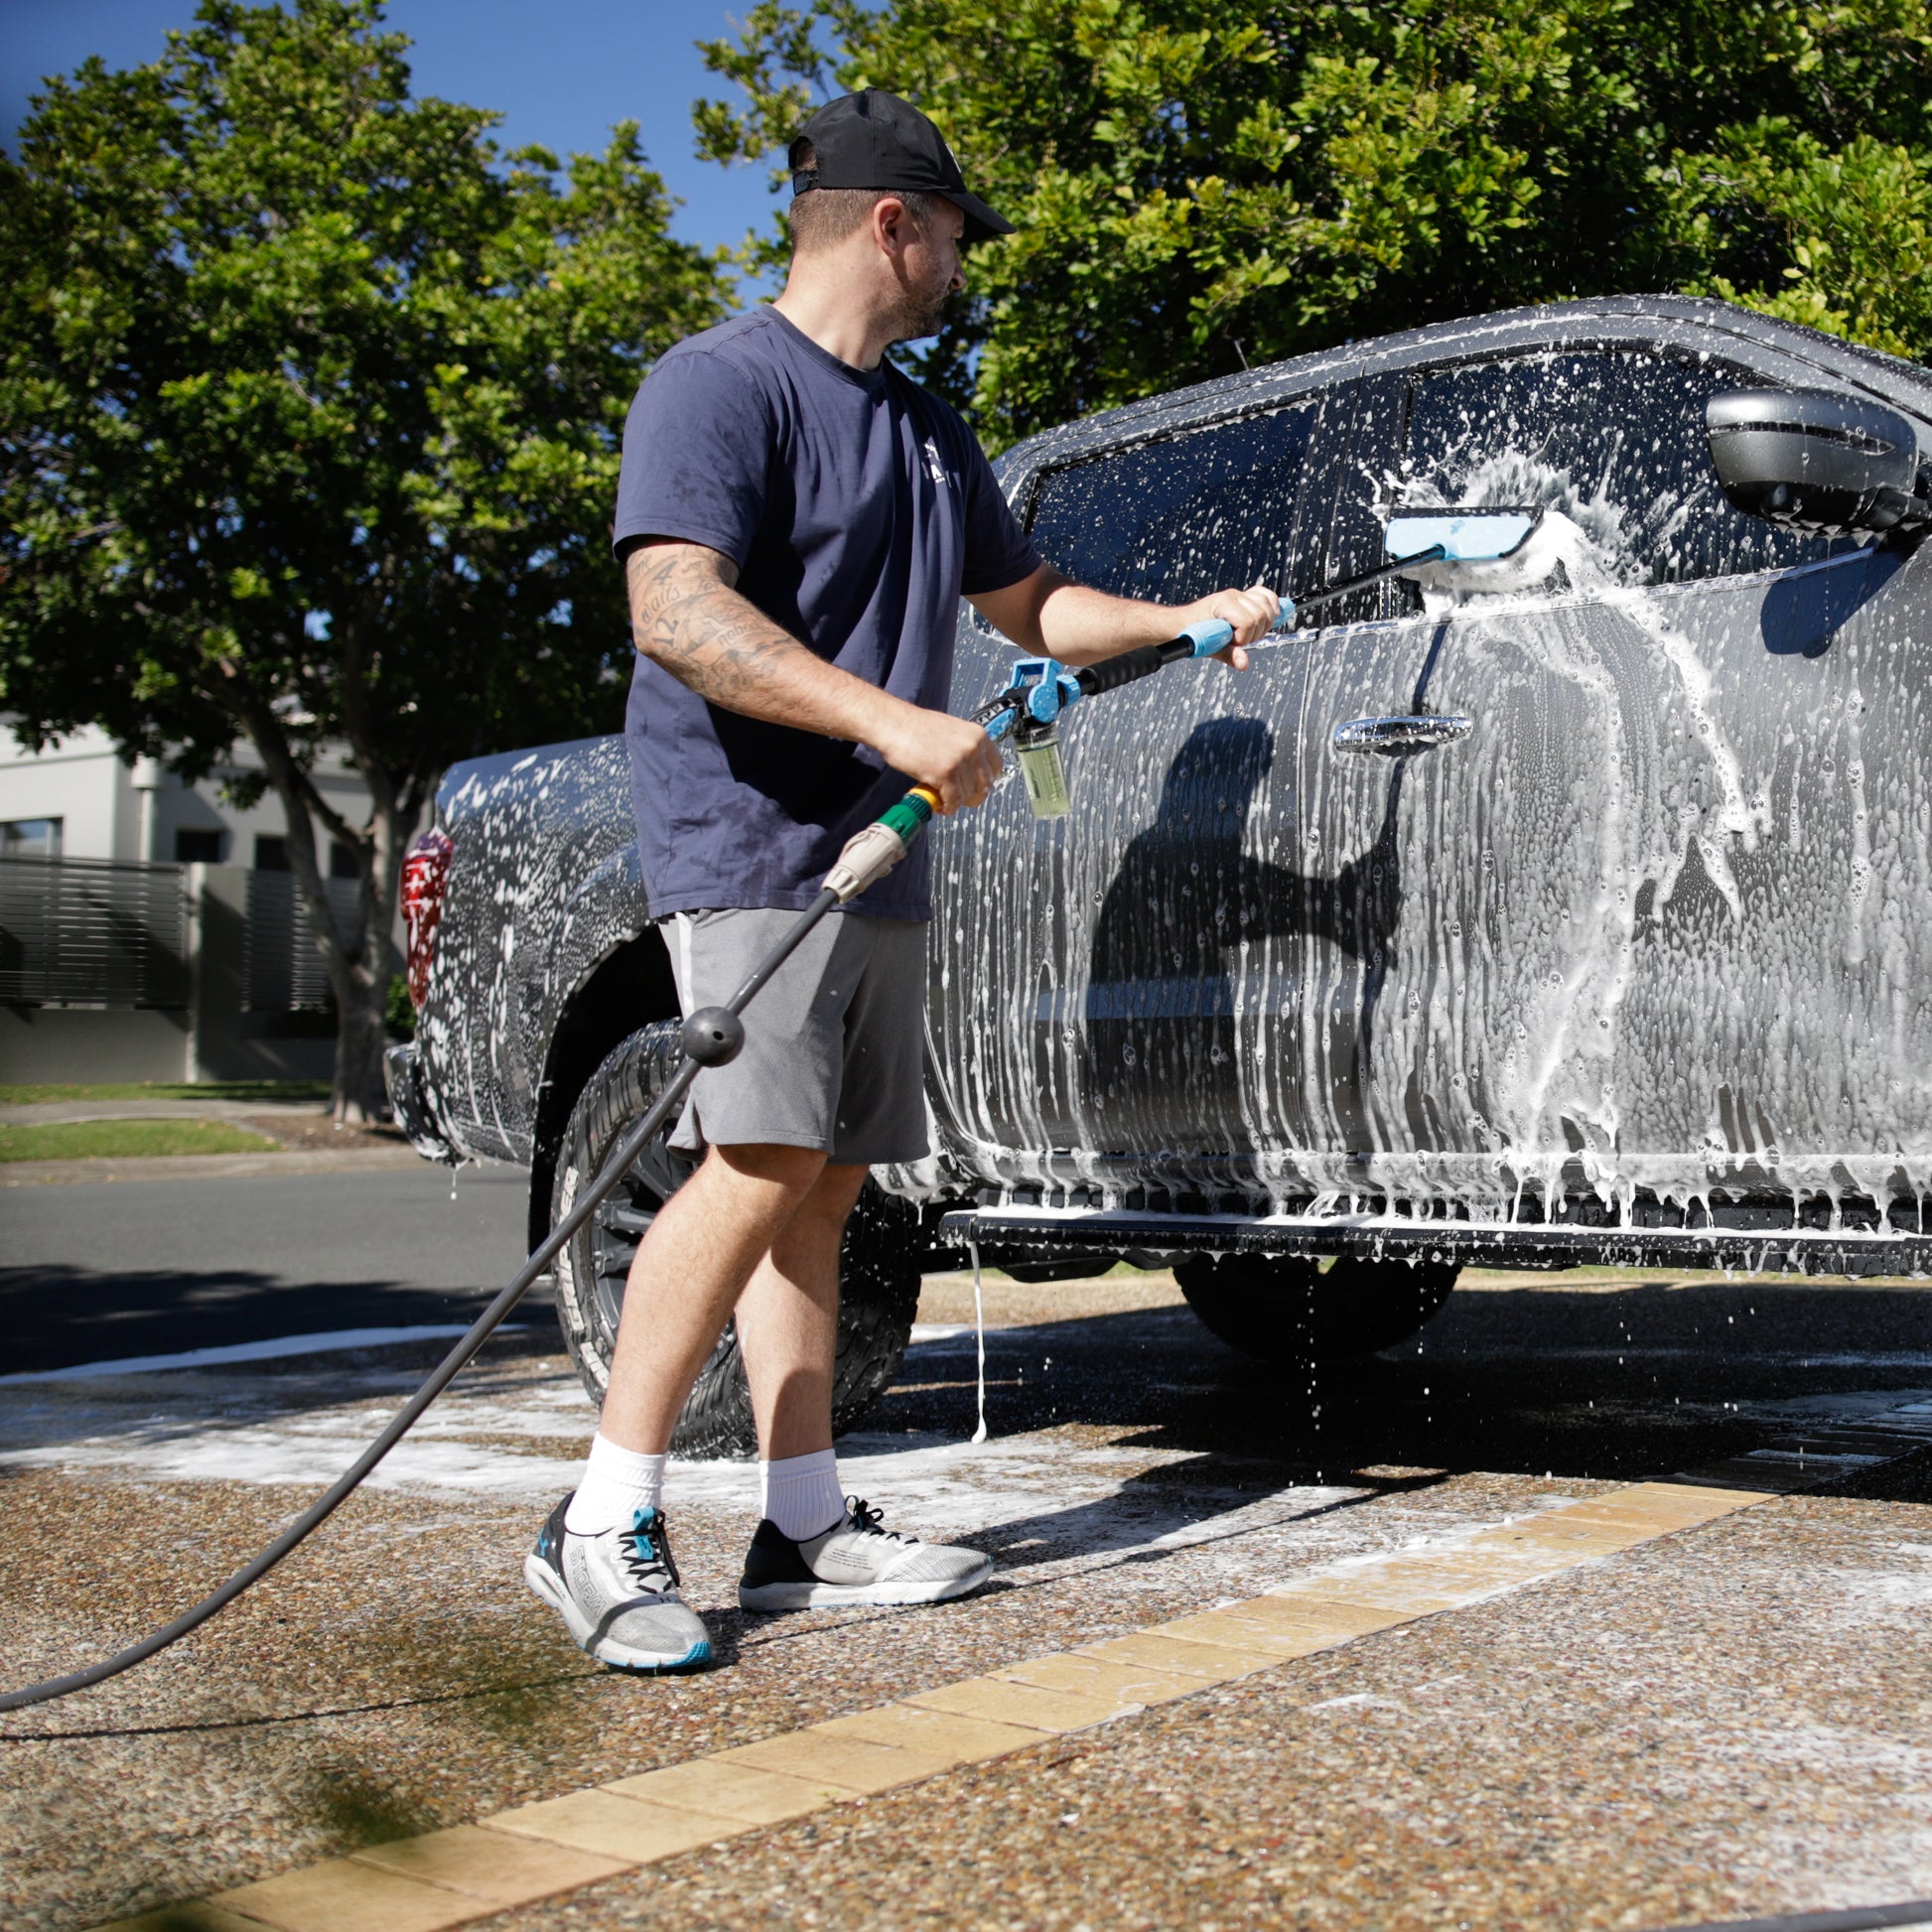 hose attachment car washing｜TikTok Search